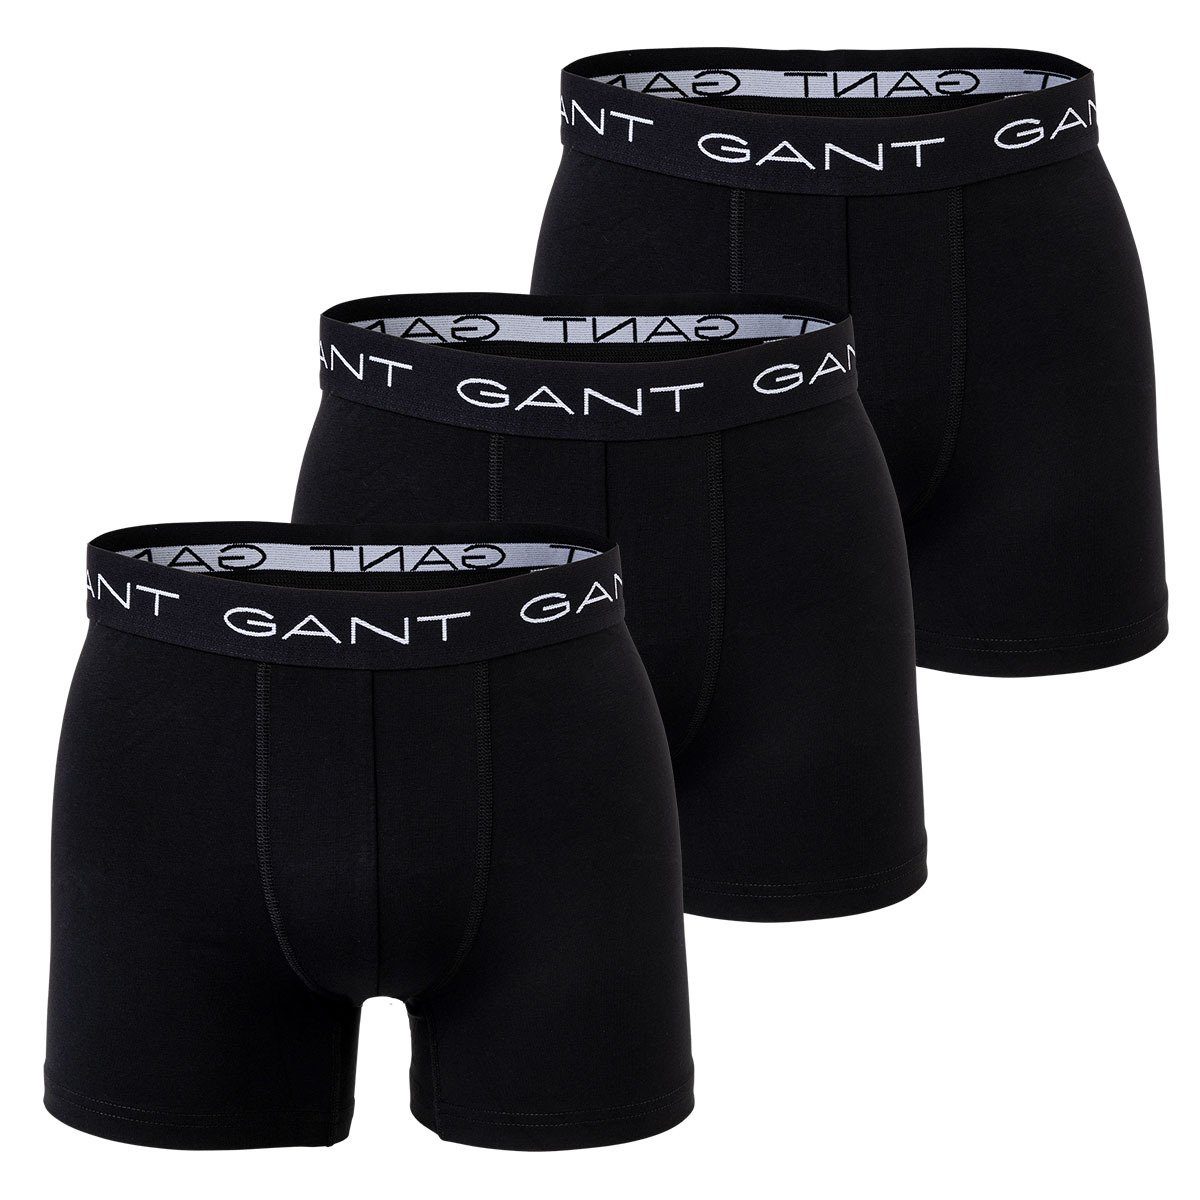 Gant Boxer Herren Boxer Shorts, 3er Pack - Boxer Briefs Schwarz